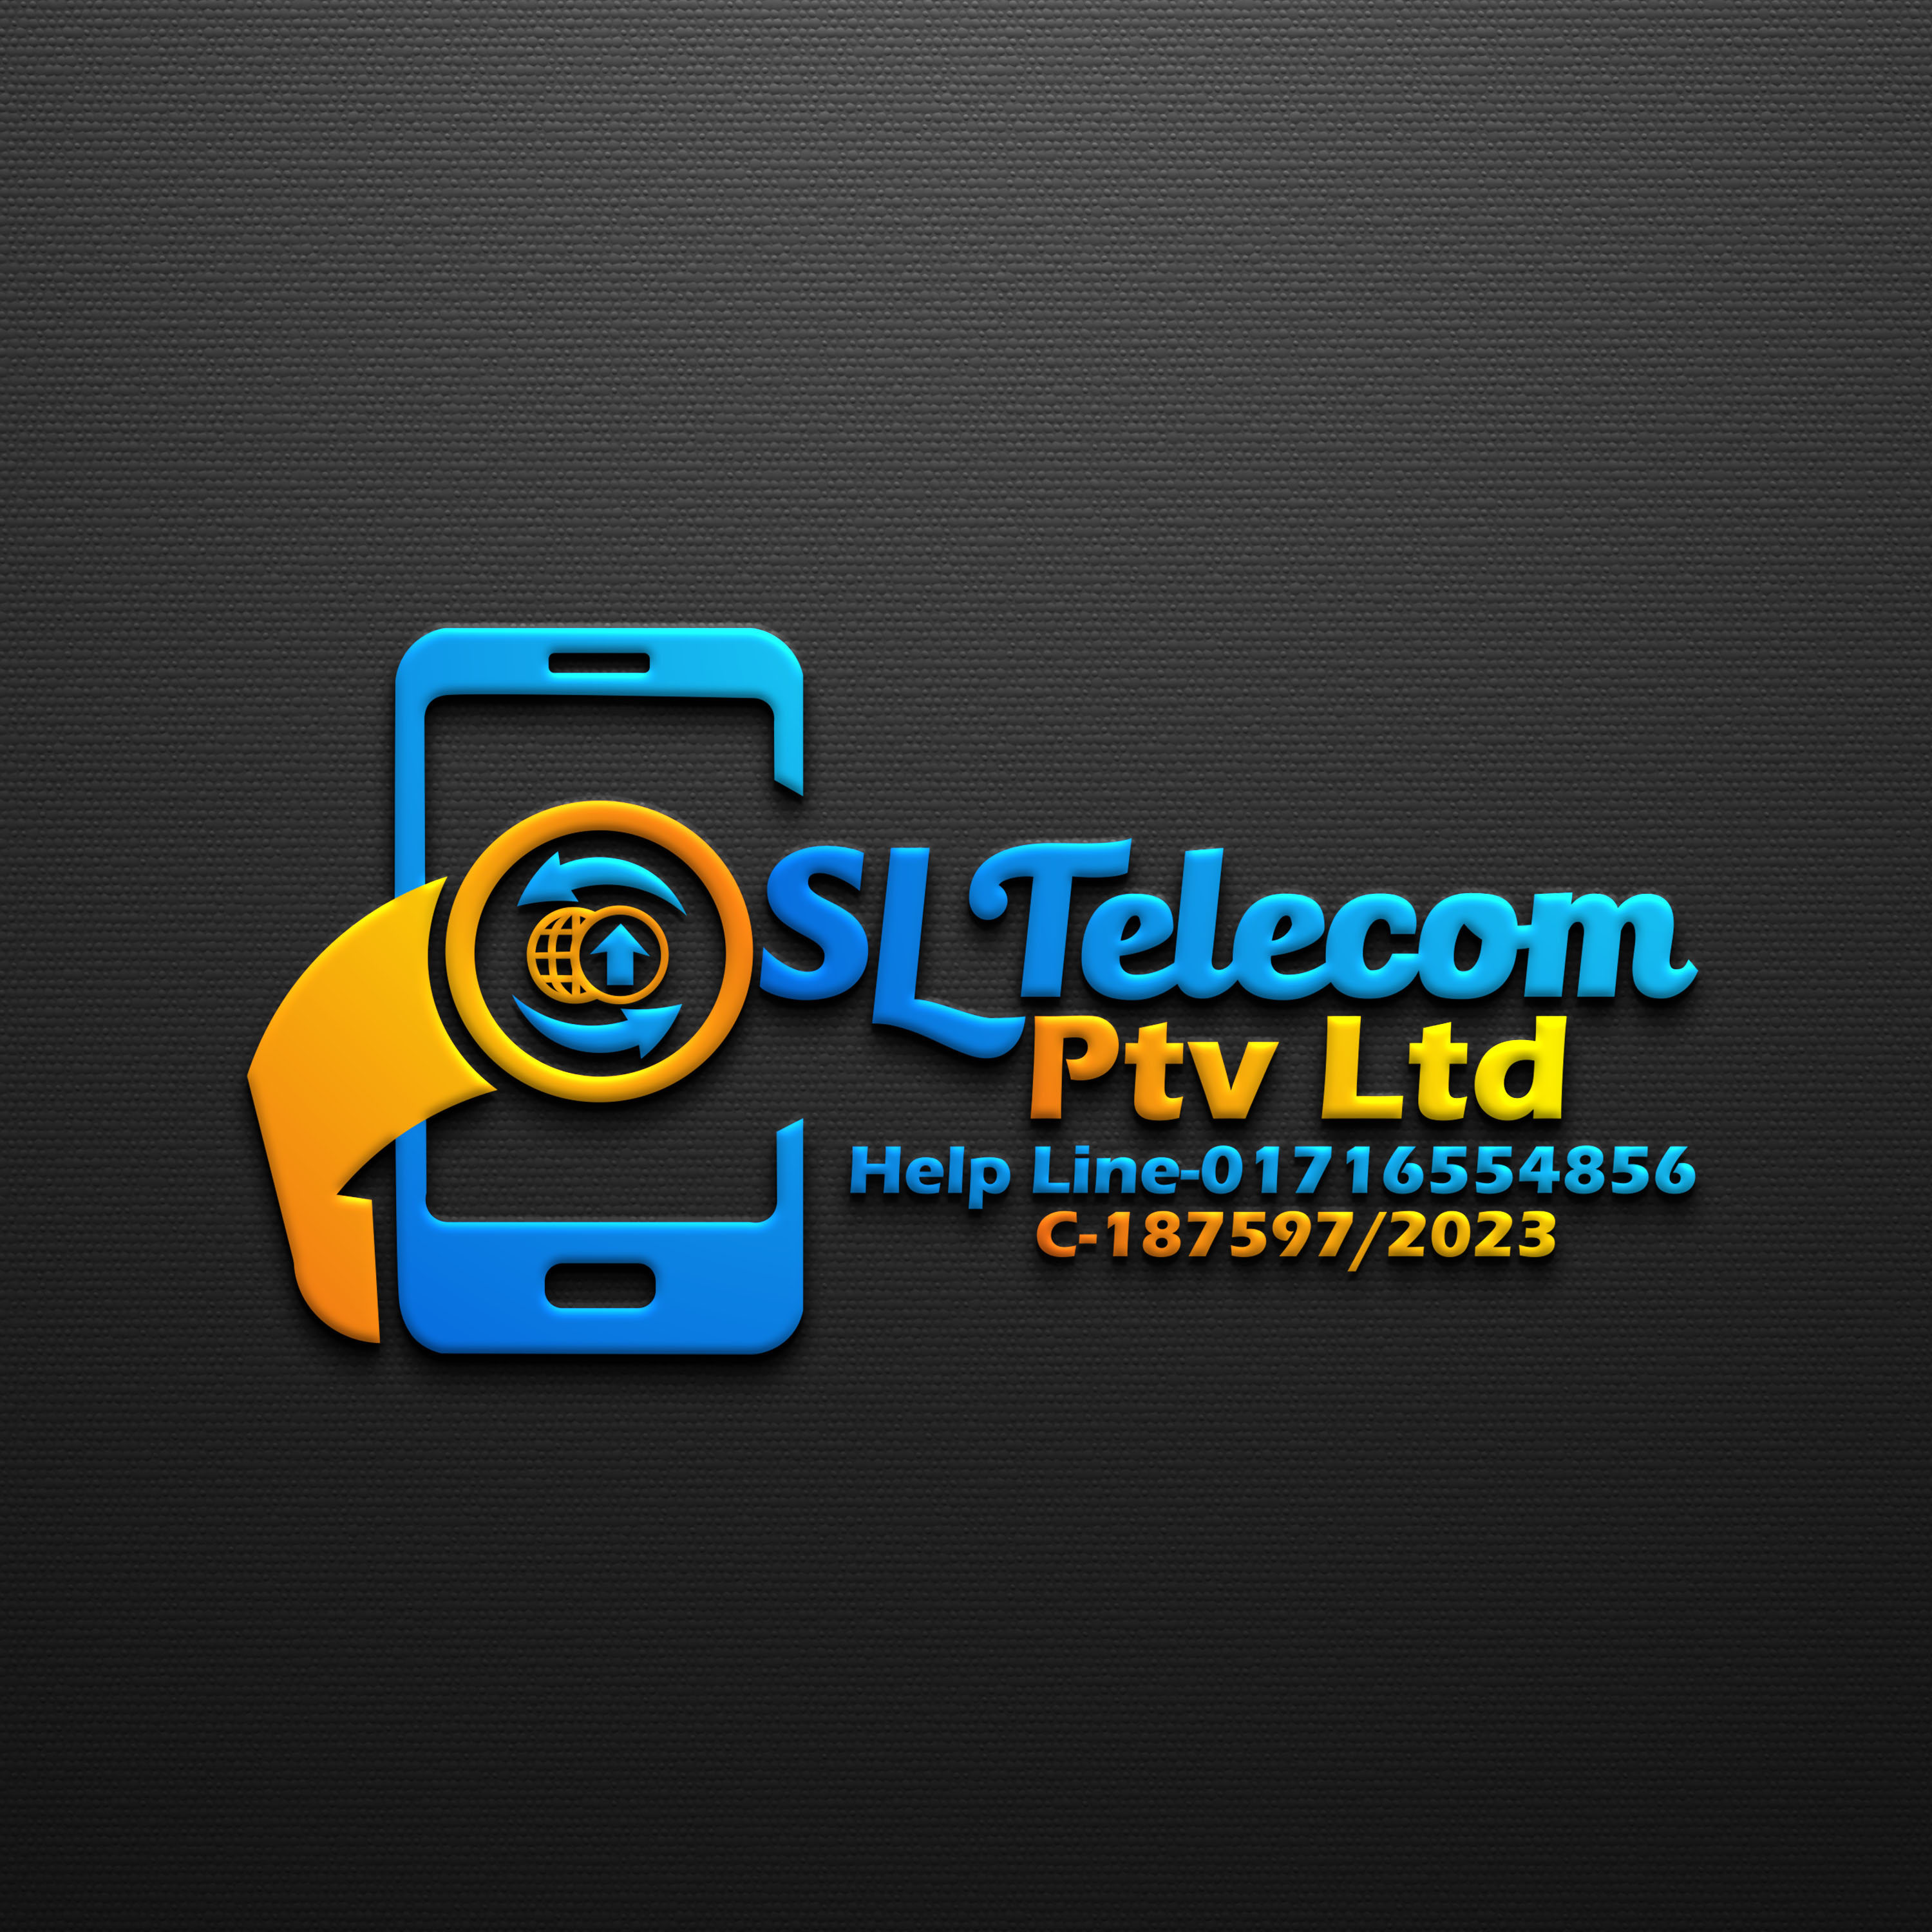 SL Telecom Ptv Ltd